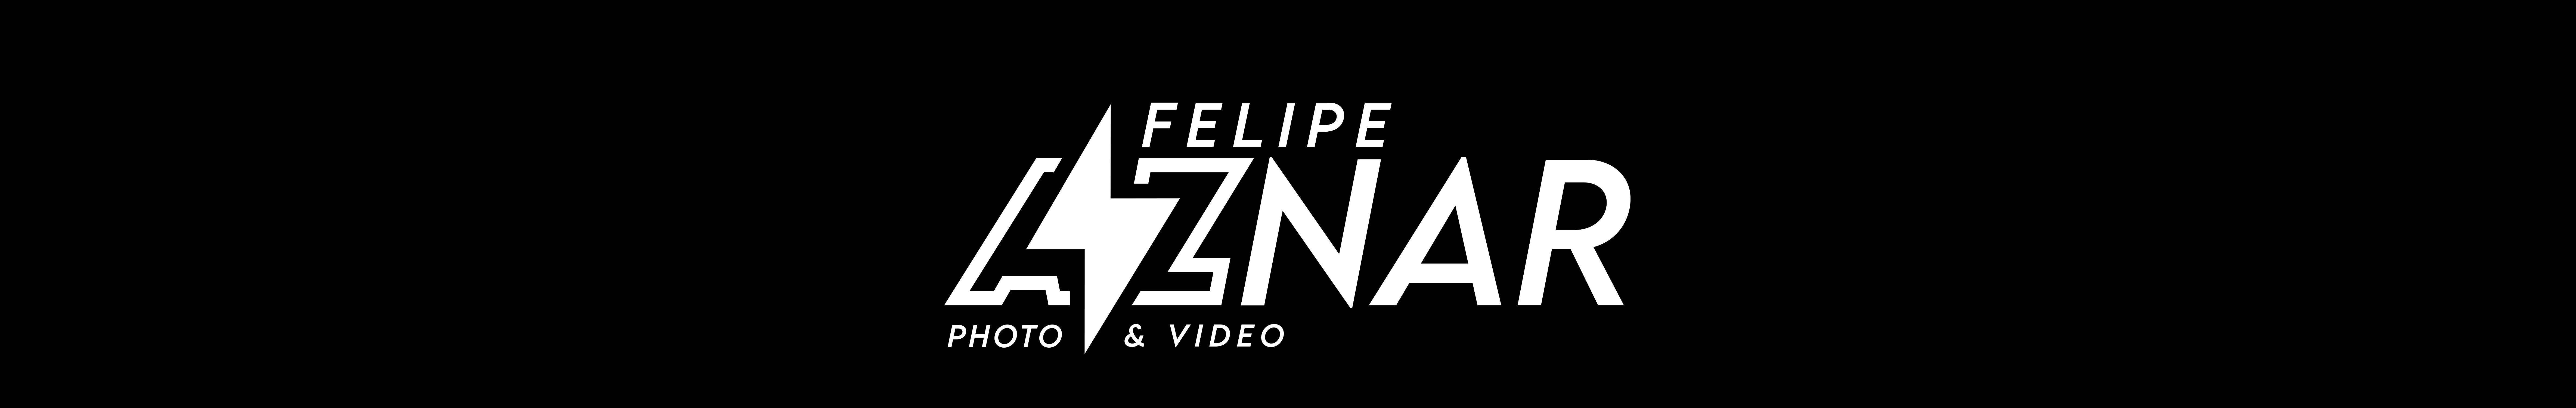 Profielbanner van Felipe Aznar